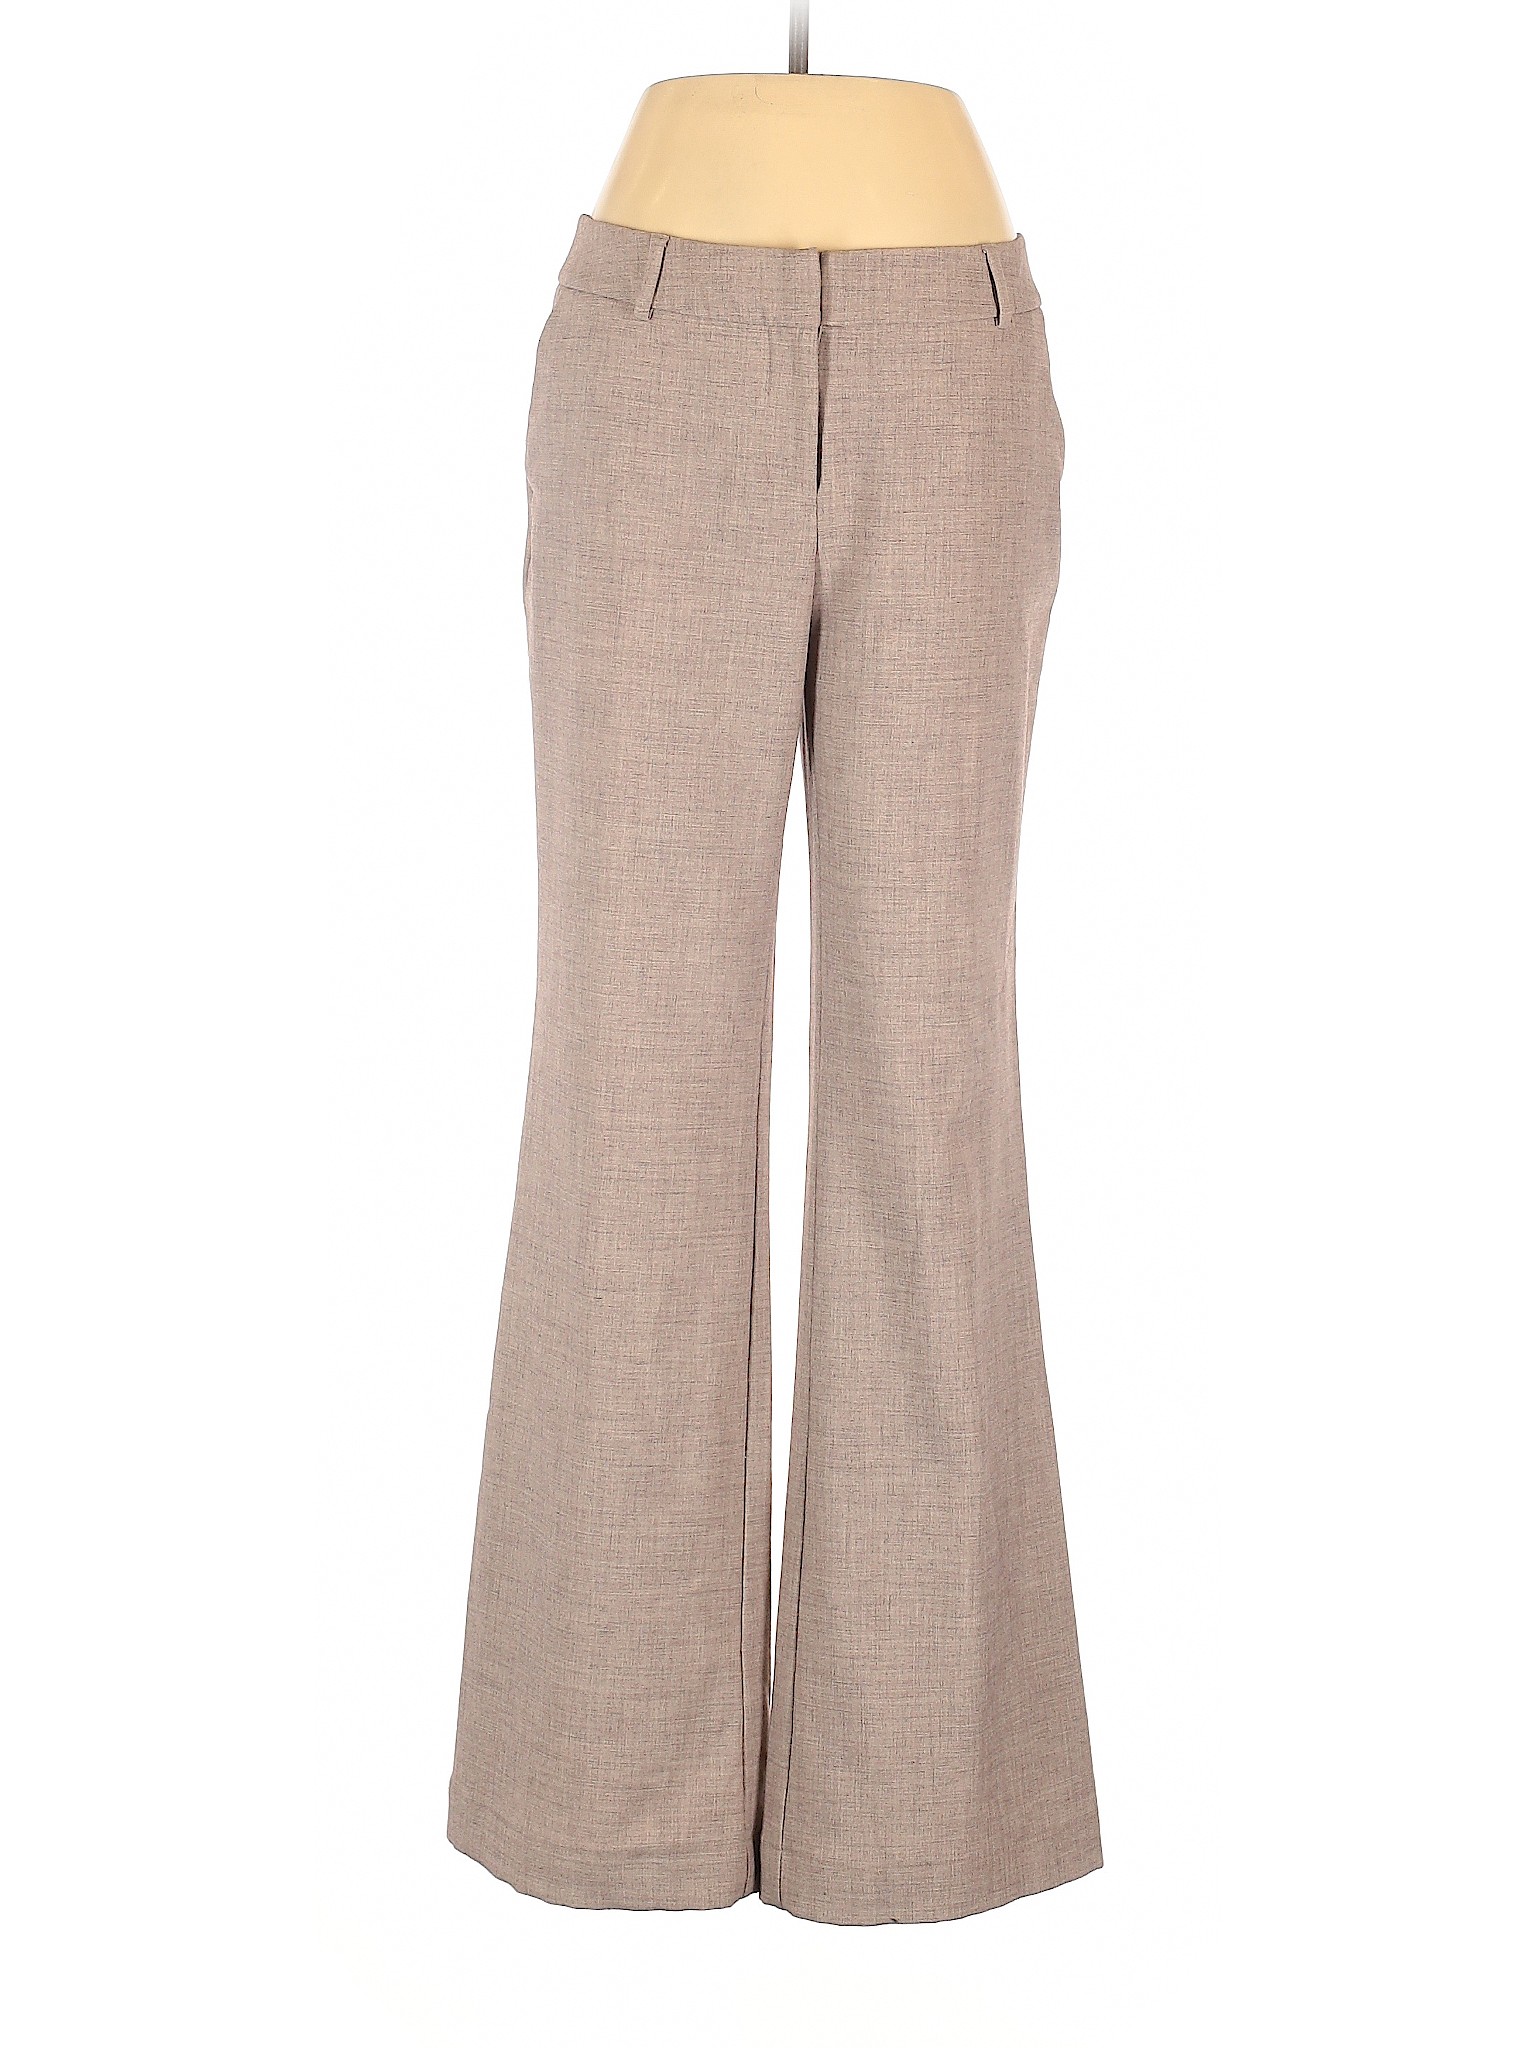 Apt. 9 Women Brown Casual Pants 4 Tall | eBay